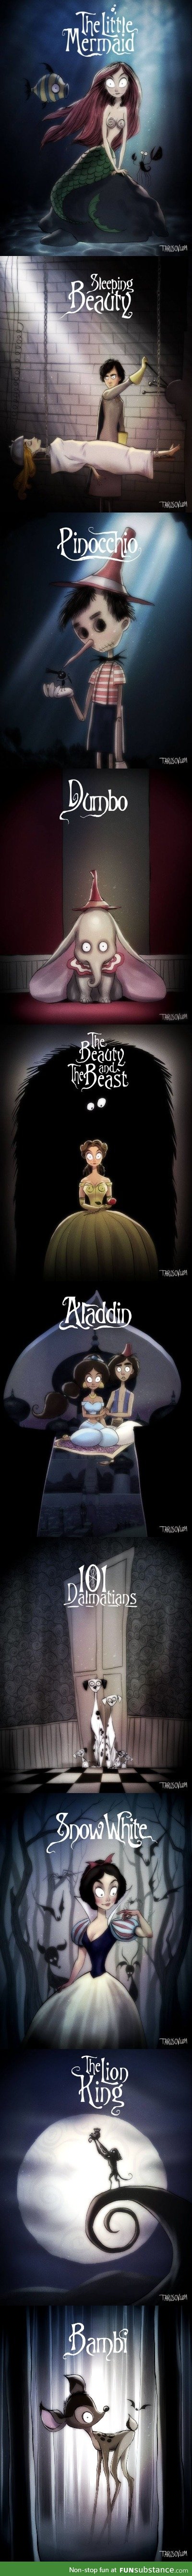 Tim Burton style Disney posters